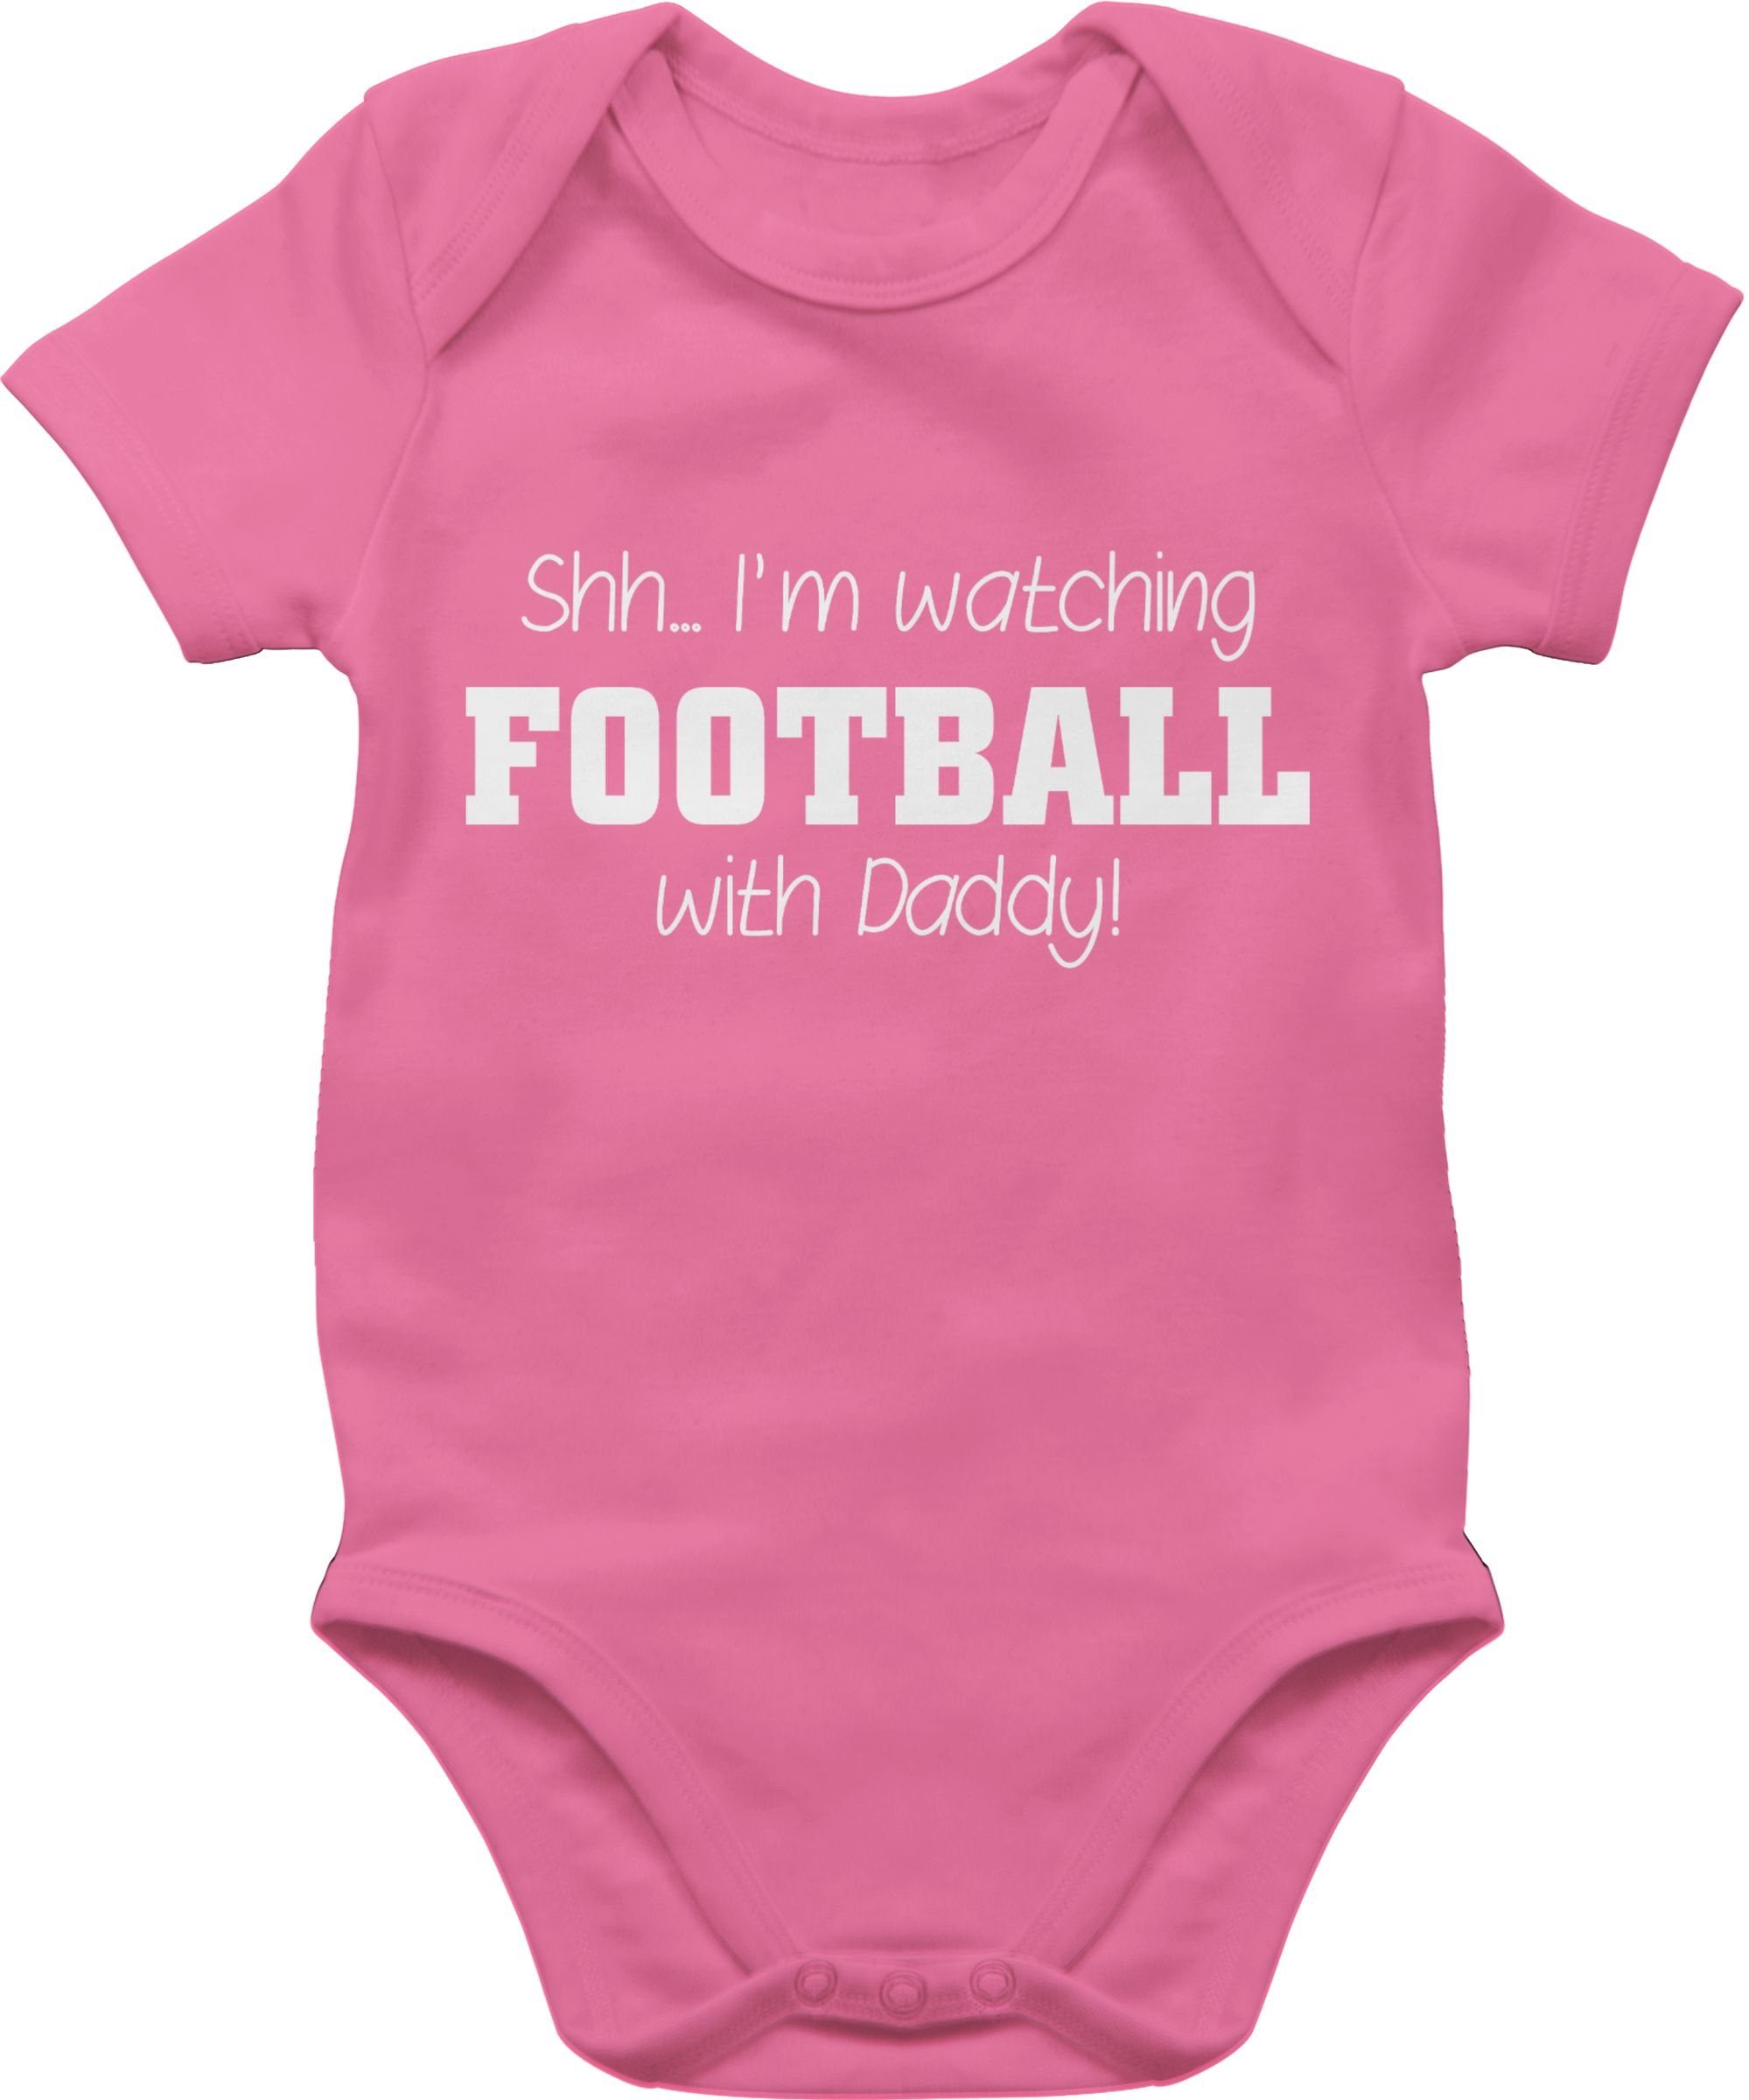 Shirtracer Shirtbody Shh...I'm watching football with Daddy! - weiß Sport & Bewegung Baby 3 Pink